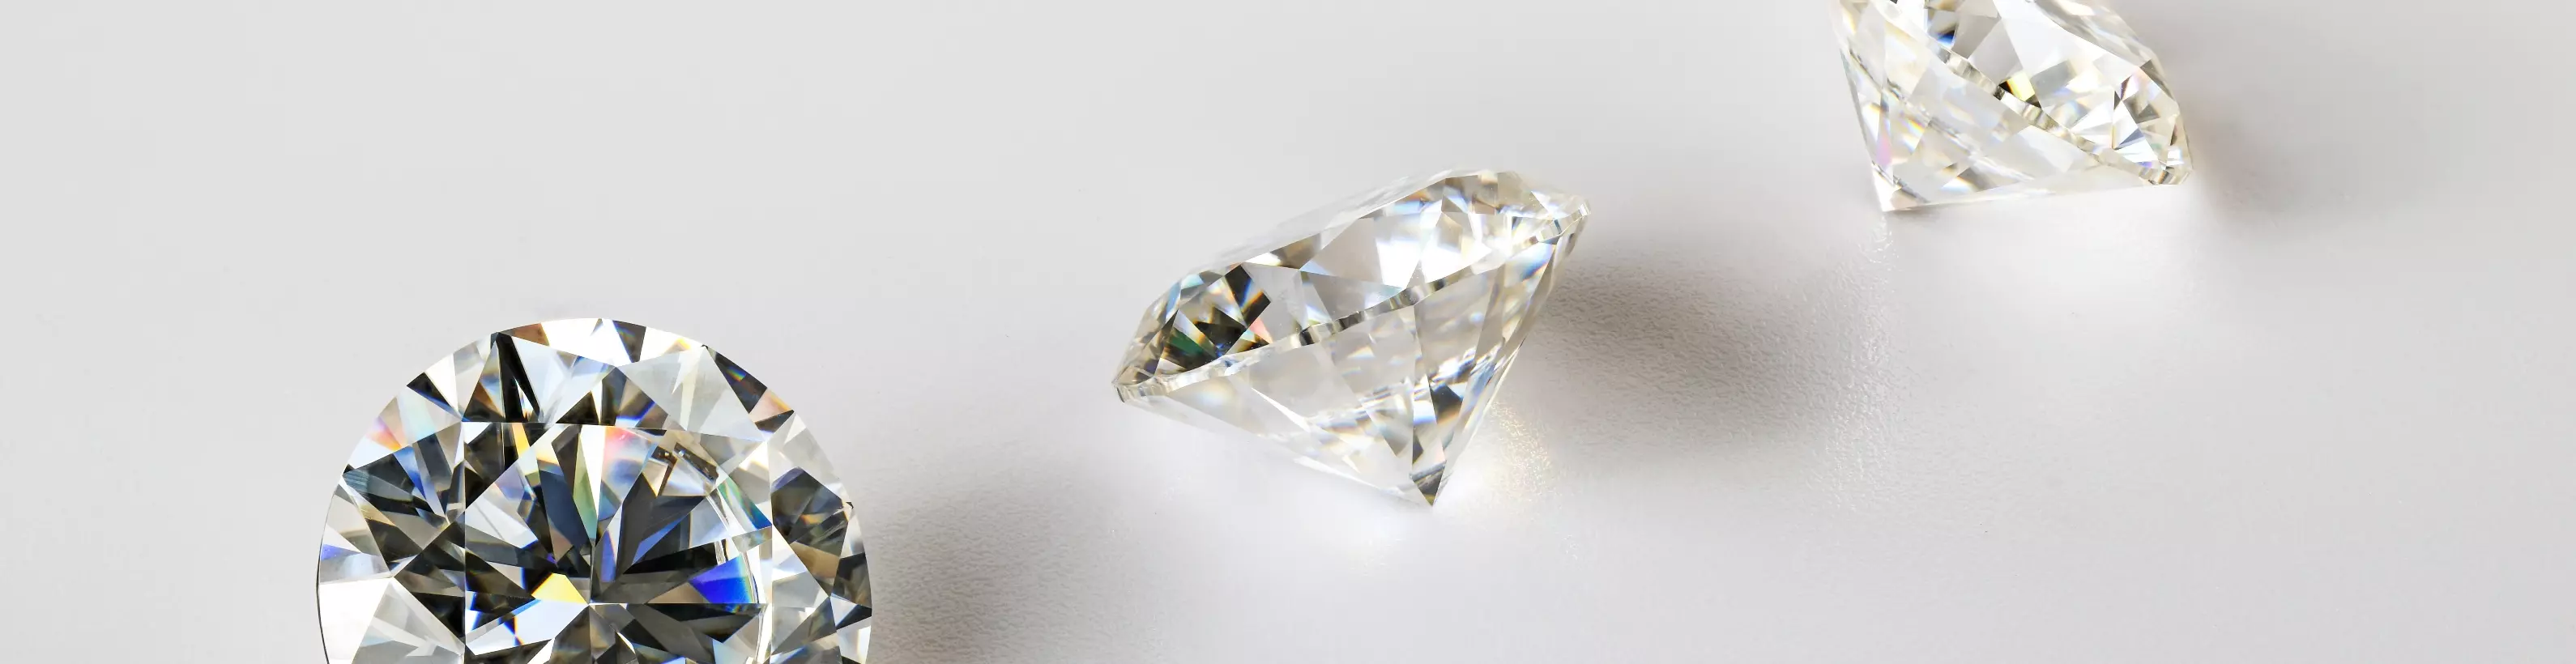 A gyémántok fotója